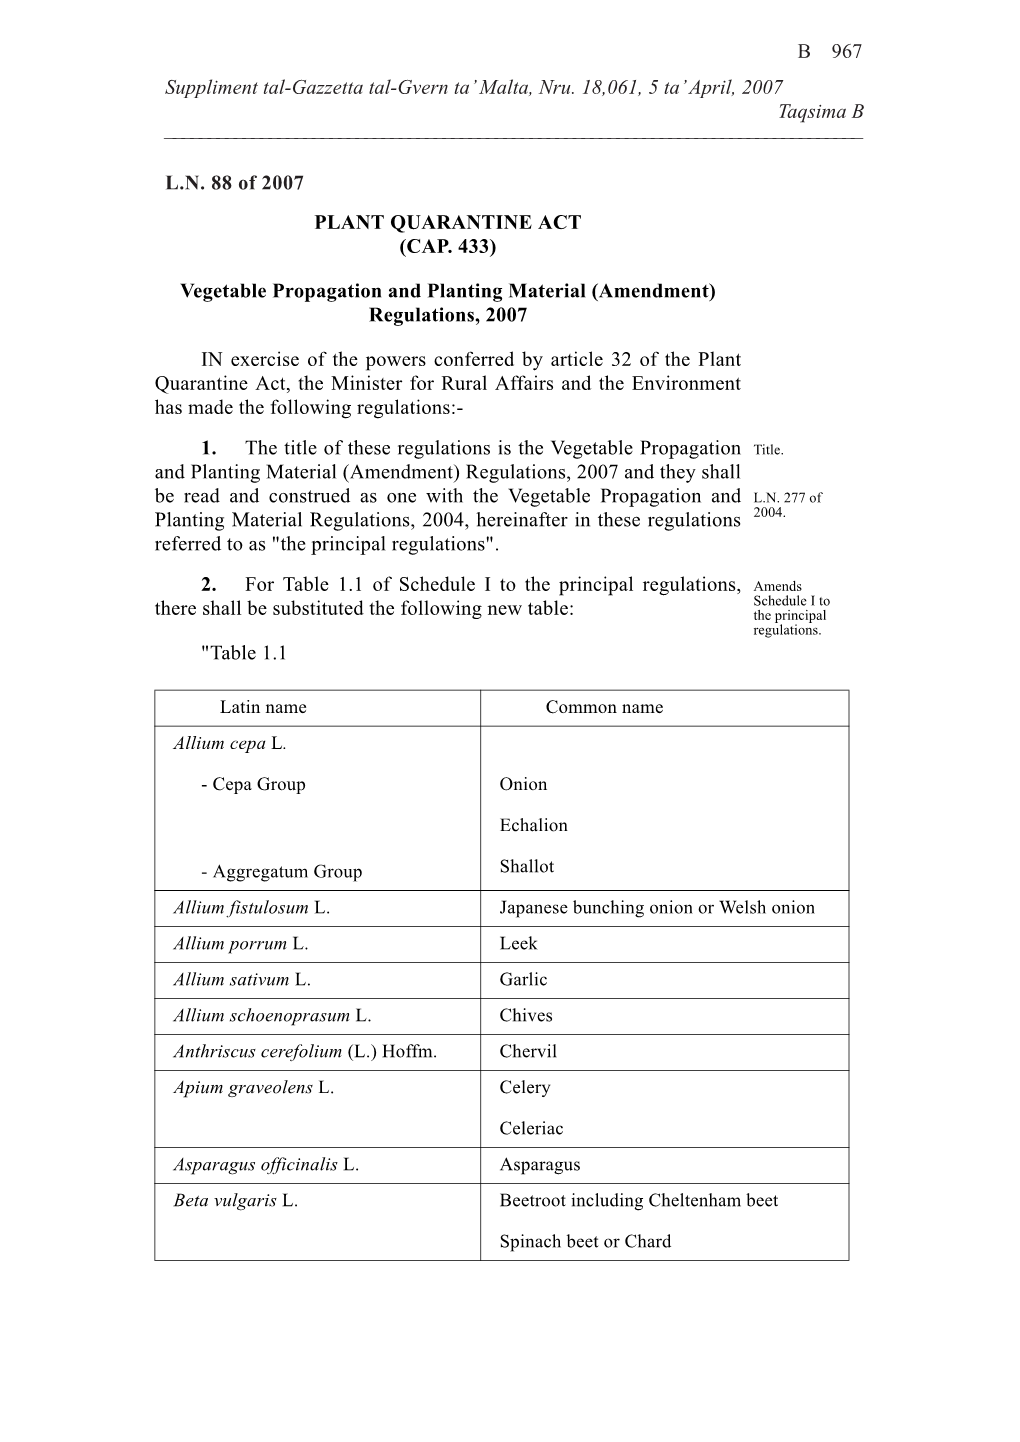 Vegetable Propagation and Planting Material (Amendment) Regulations, 2007